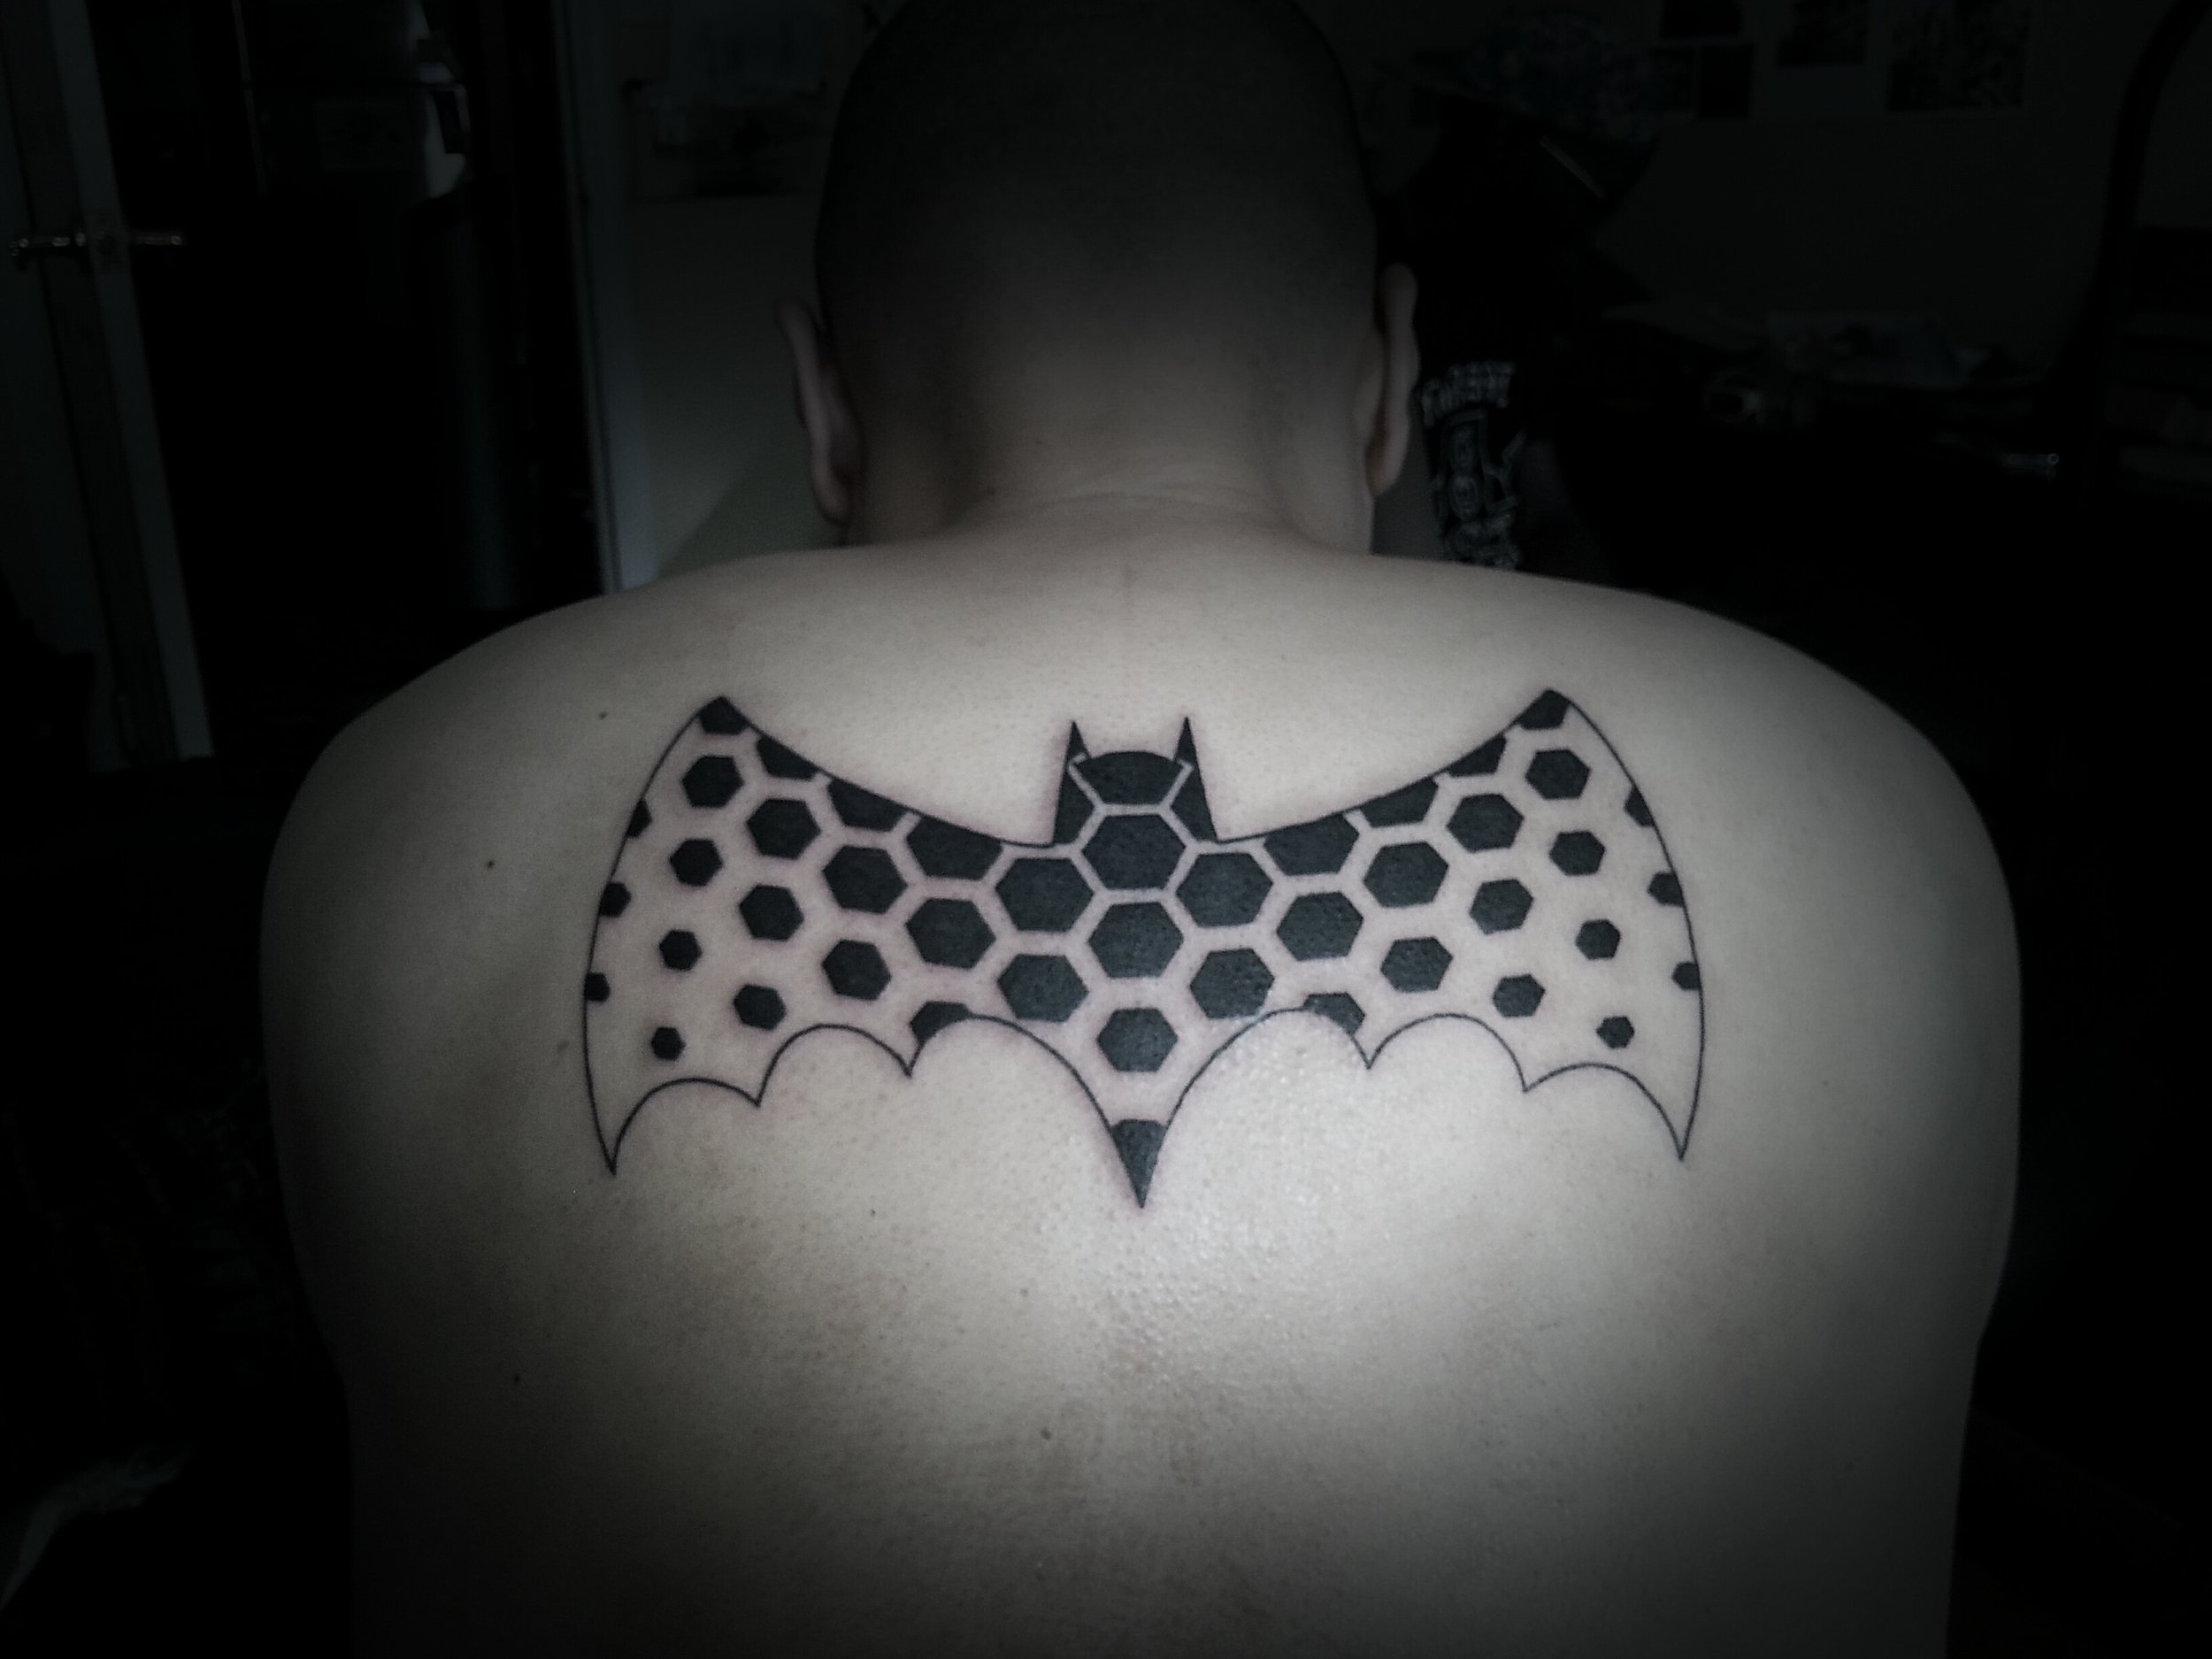 Tattoo uploaded by Mihail Miloshevski • The Dark Knight symbol #batman  #thedarkknight #dccomics #brokenink • Tattoodo